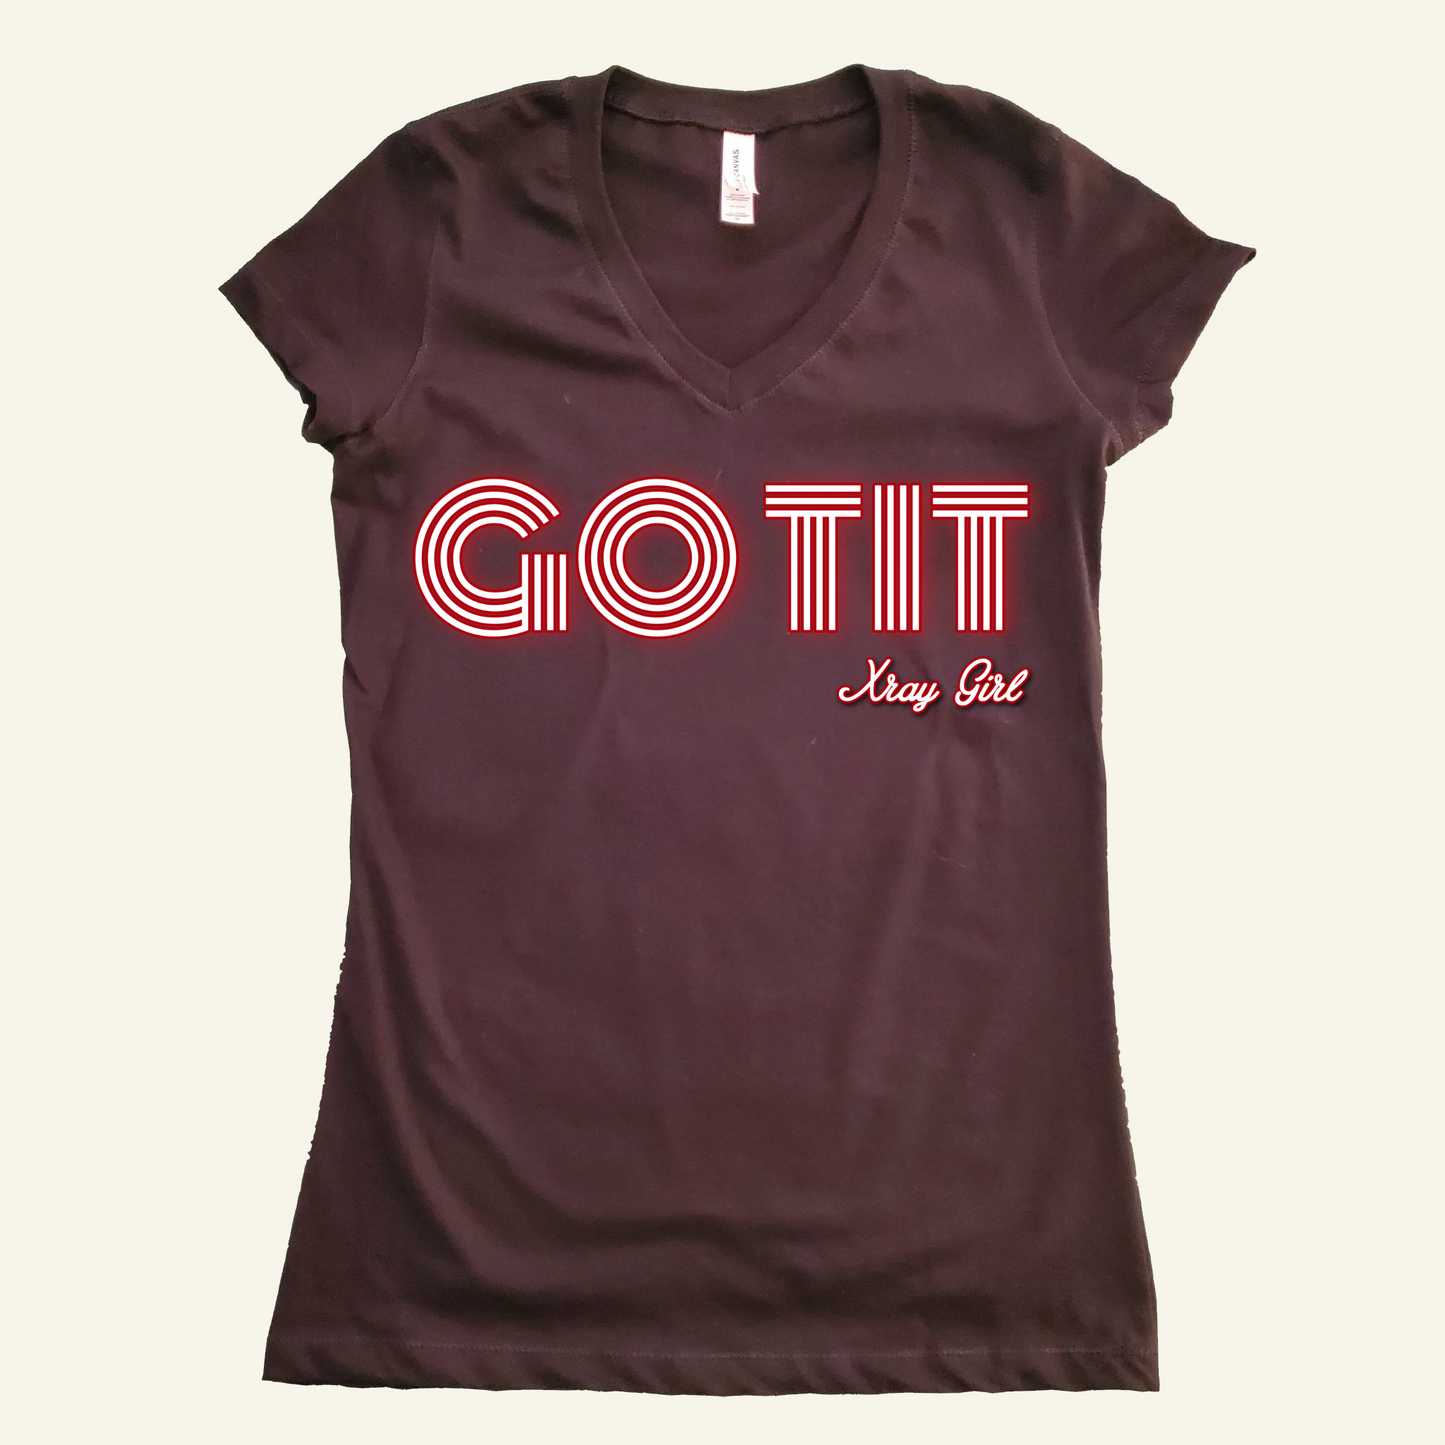 Xray Girl's "Go Tit" V-Neck Tee